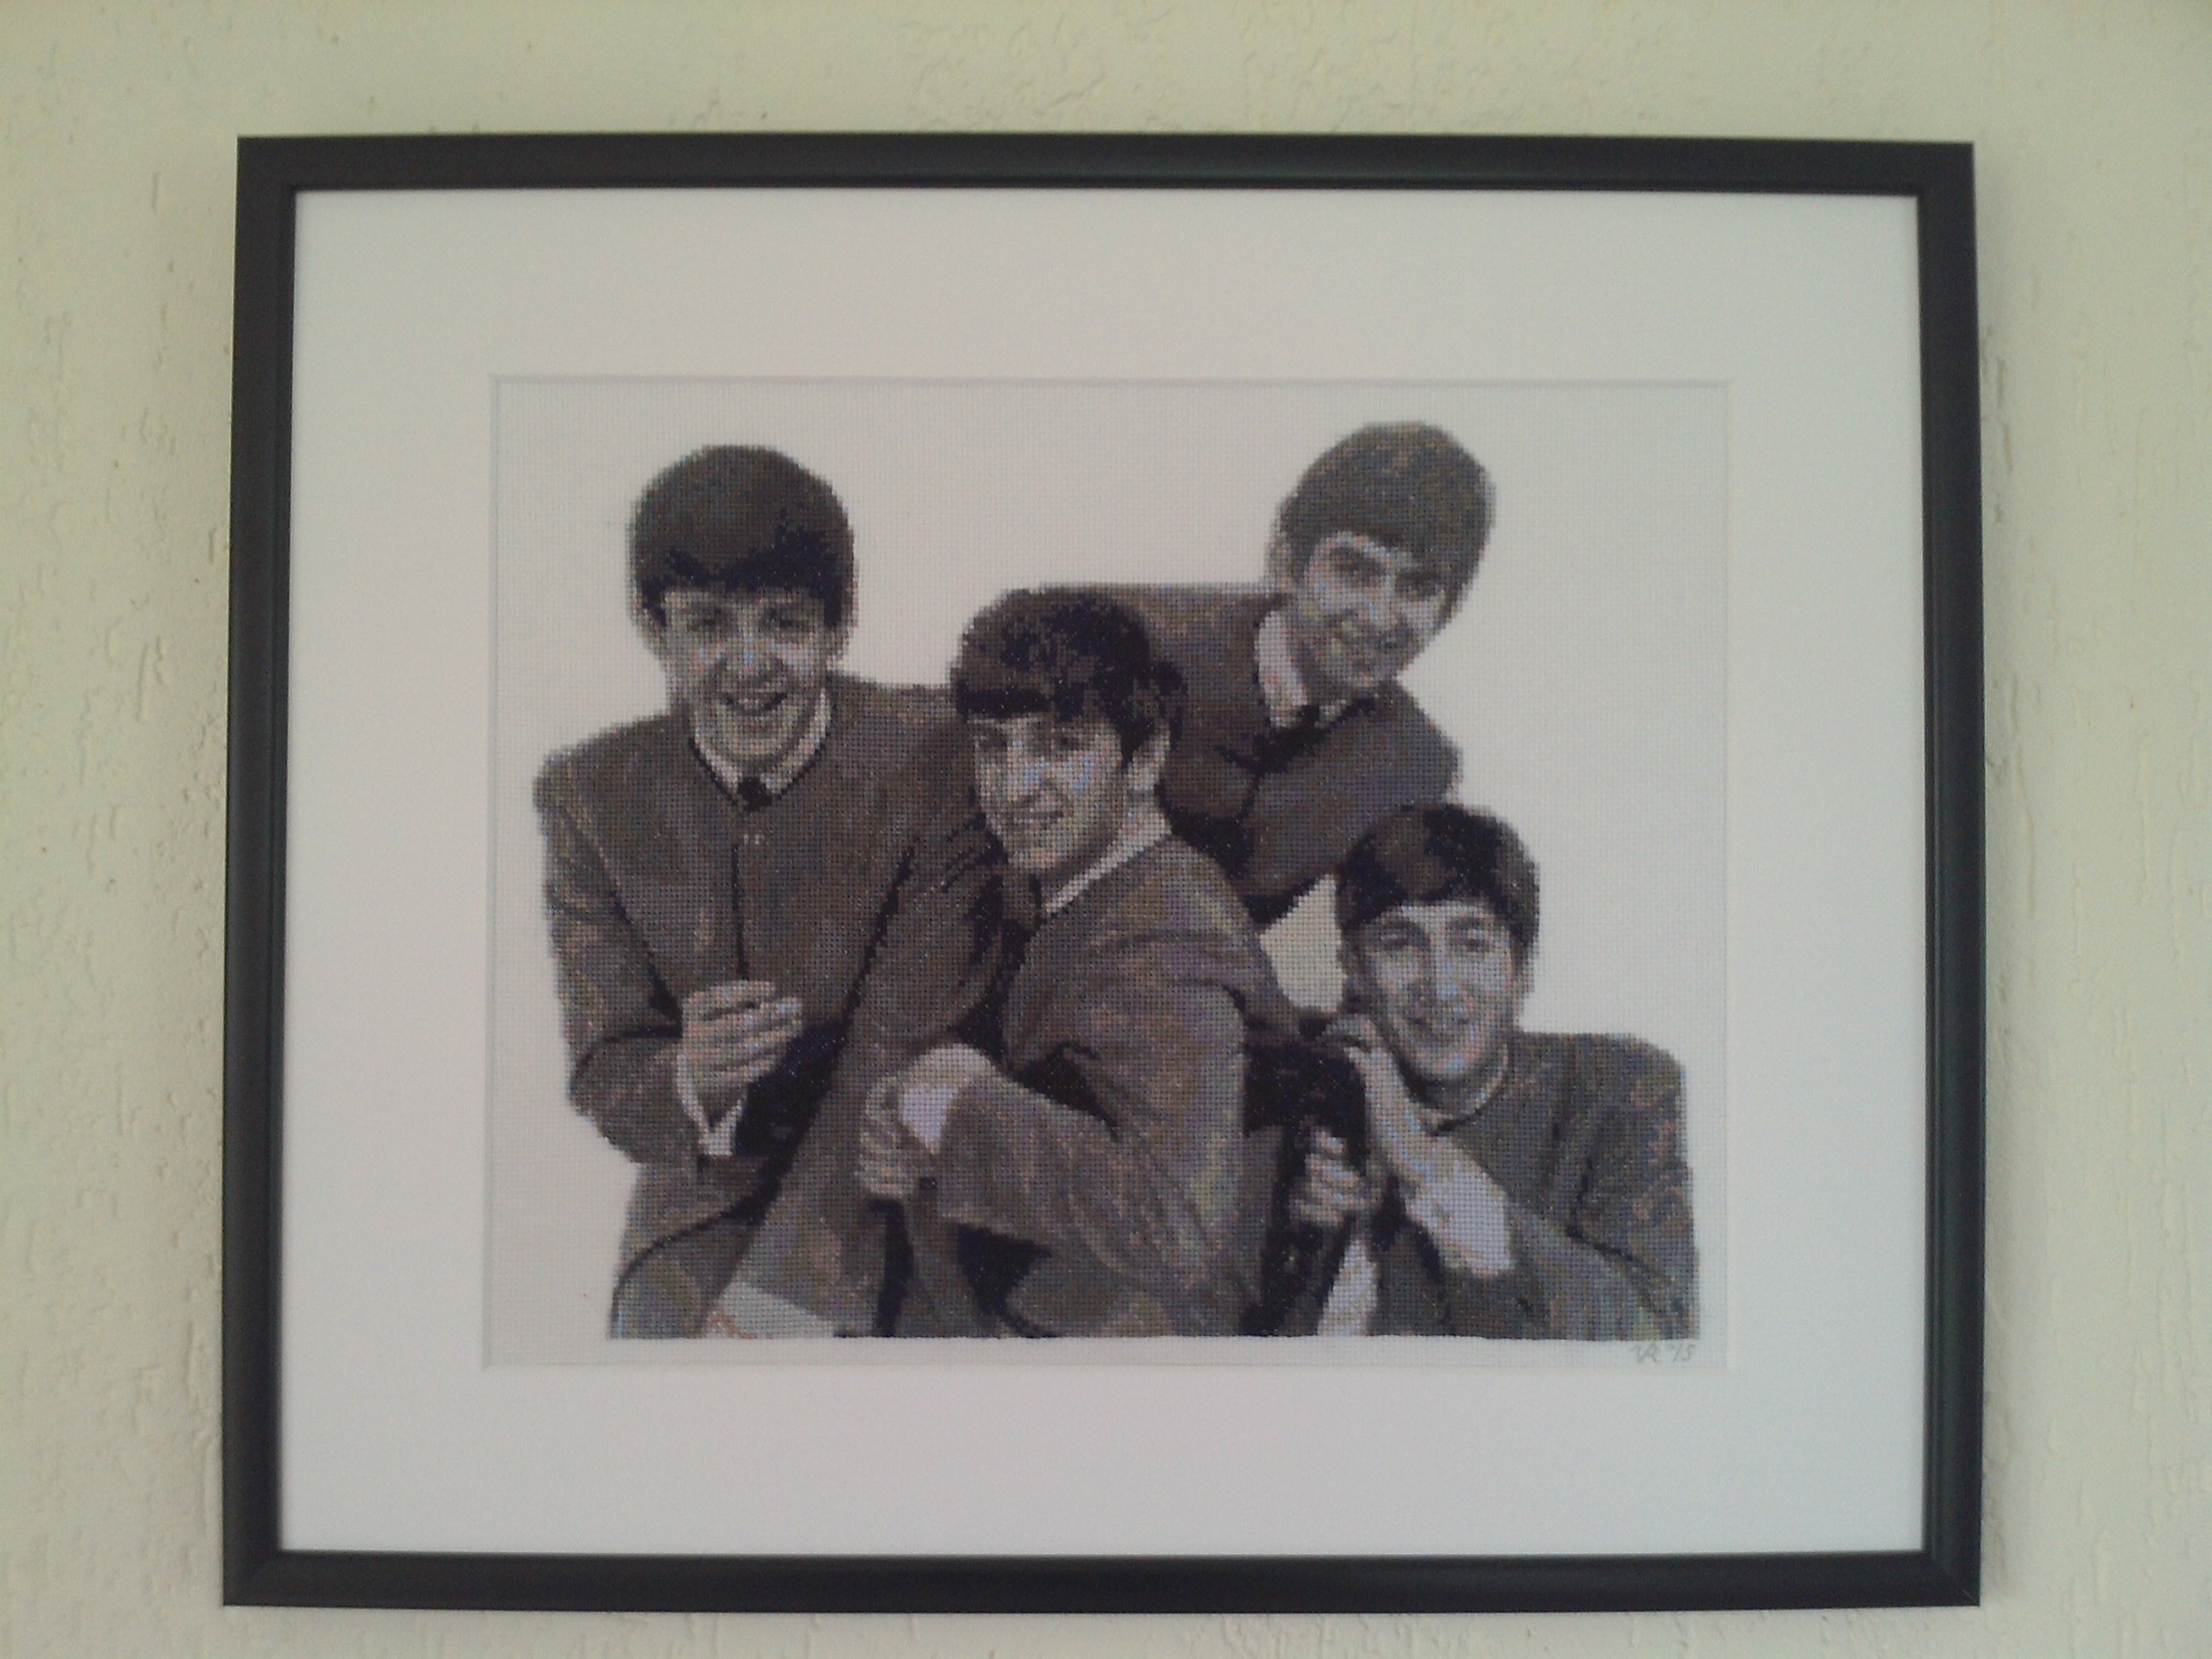 Kunstopdracht Beatlesmonument